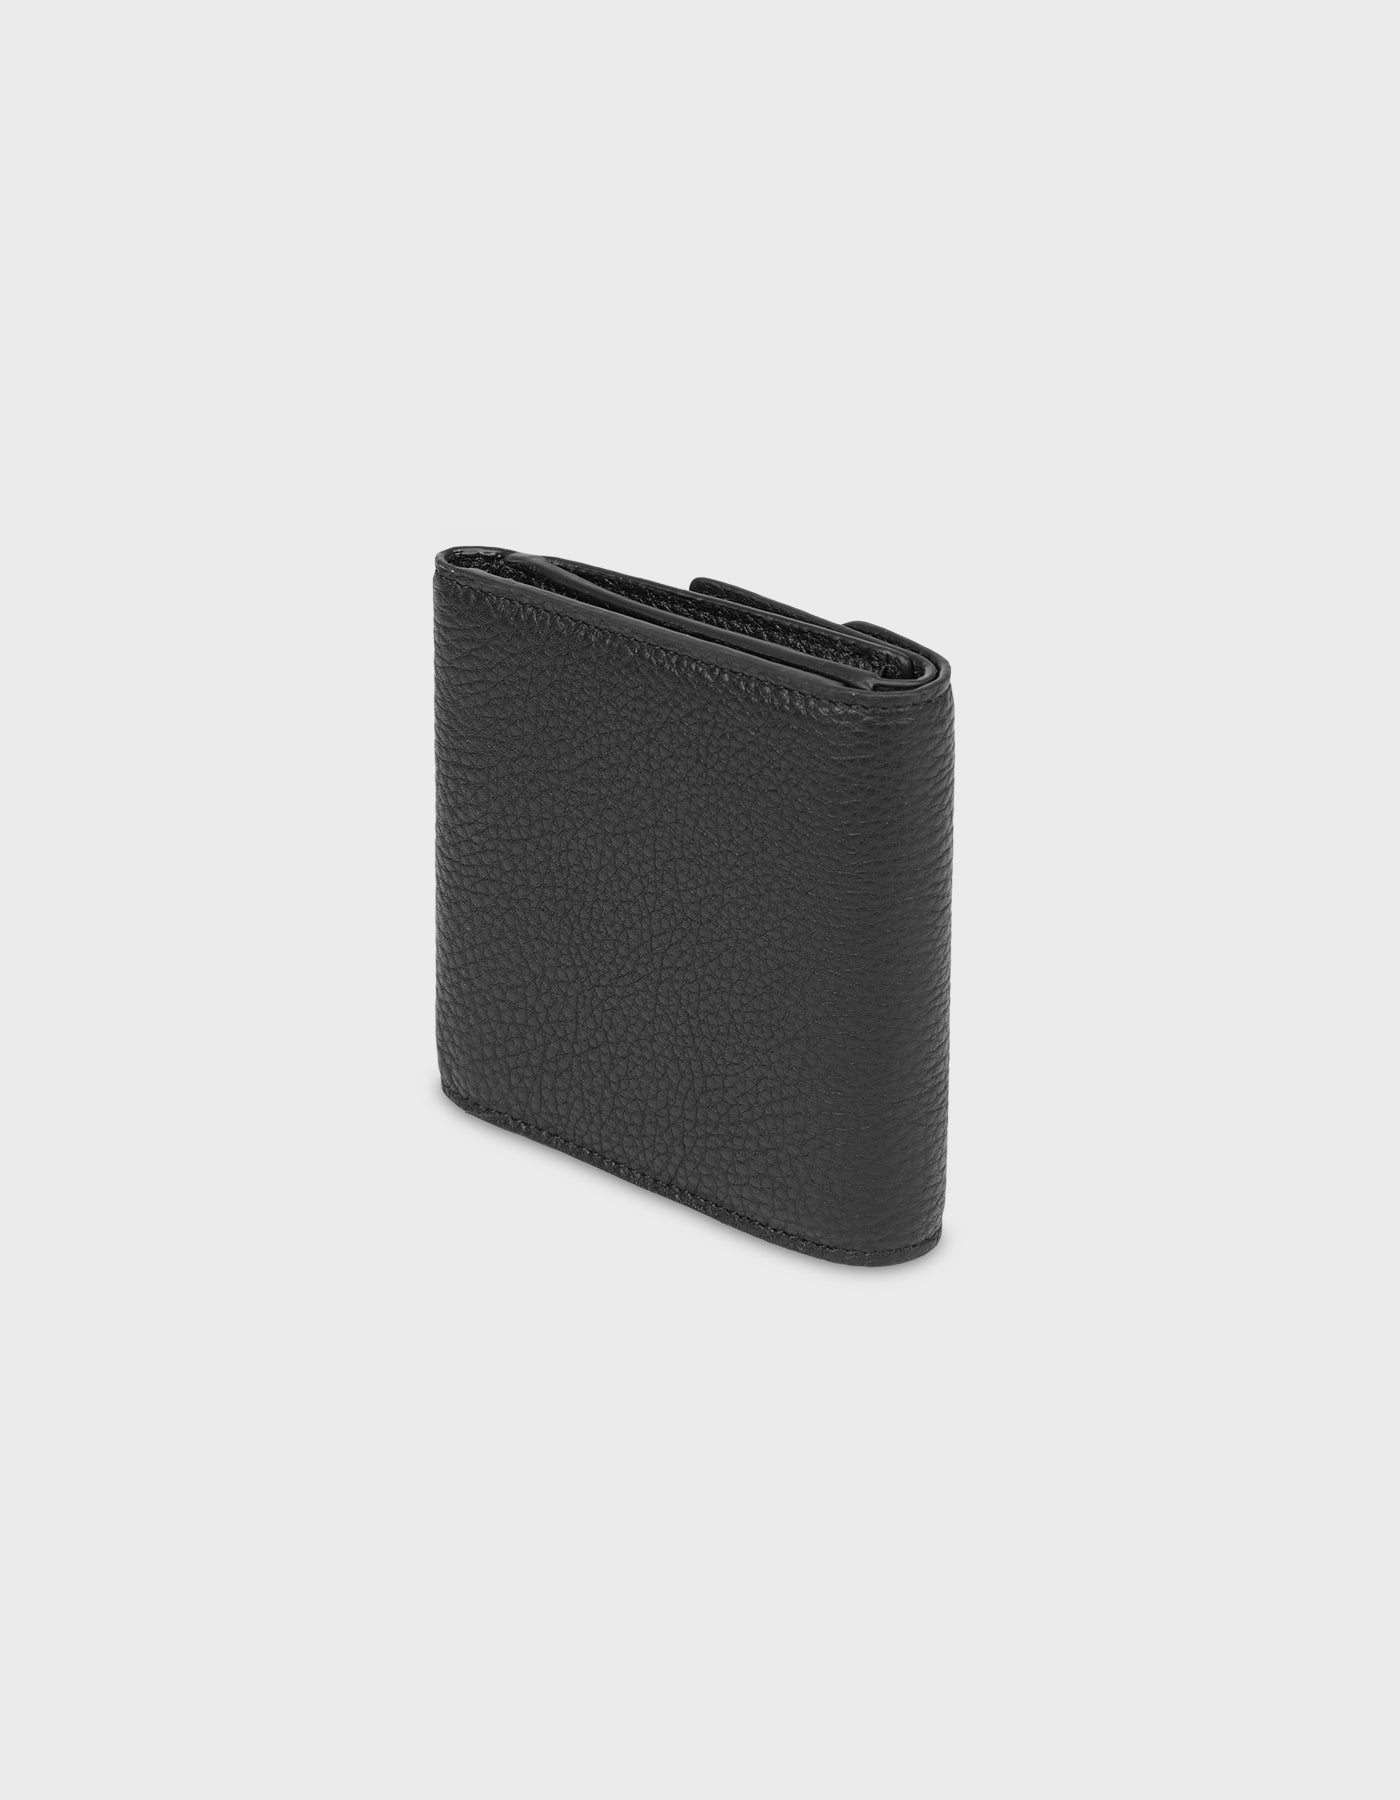 Larus Compact Wallet